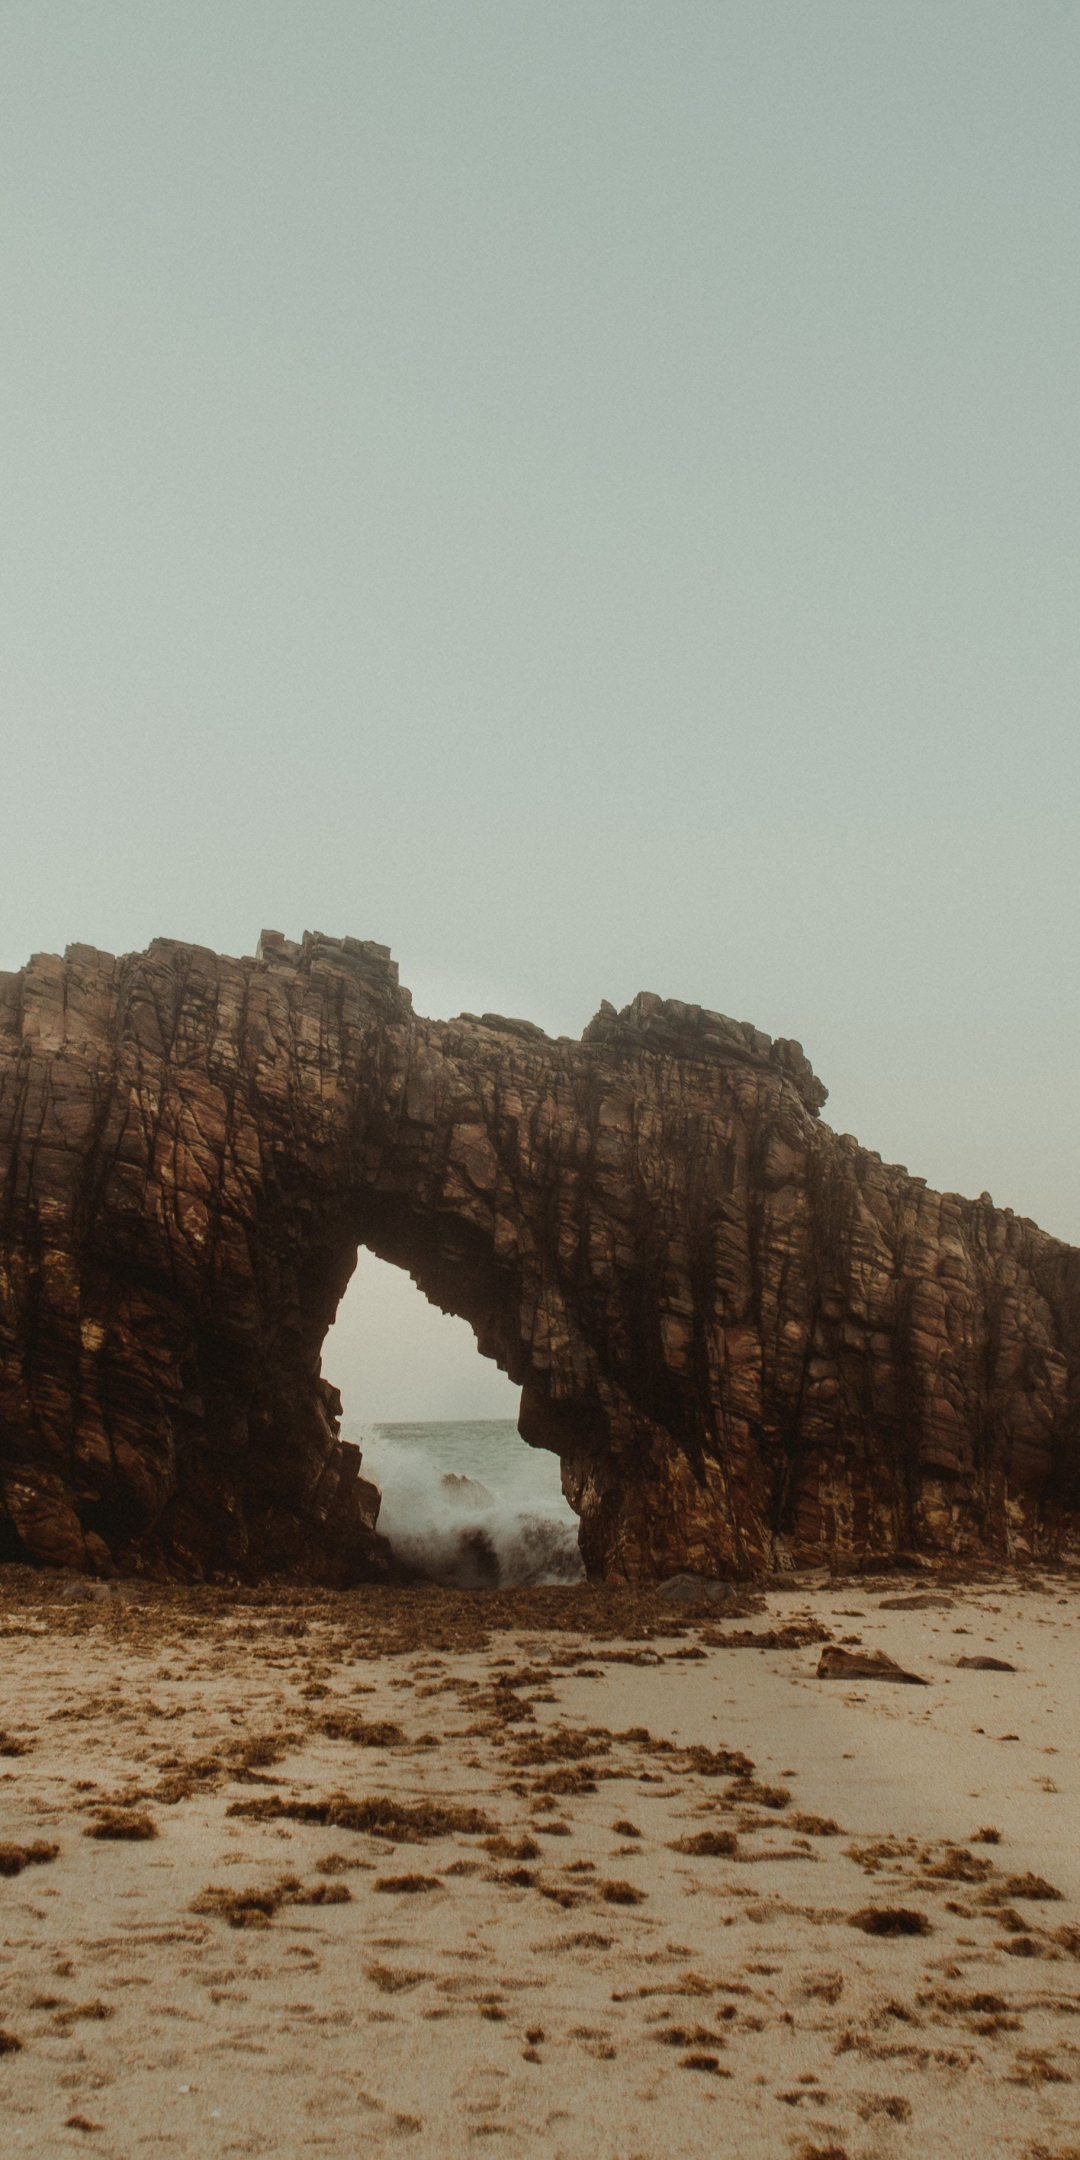 Rocks, arch, coast, beach, 1080x2160 wallpaper